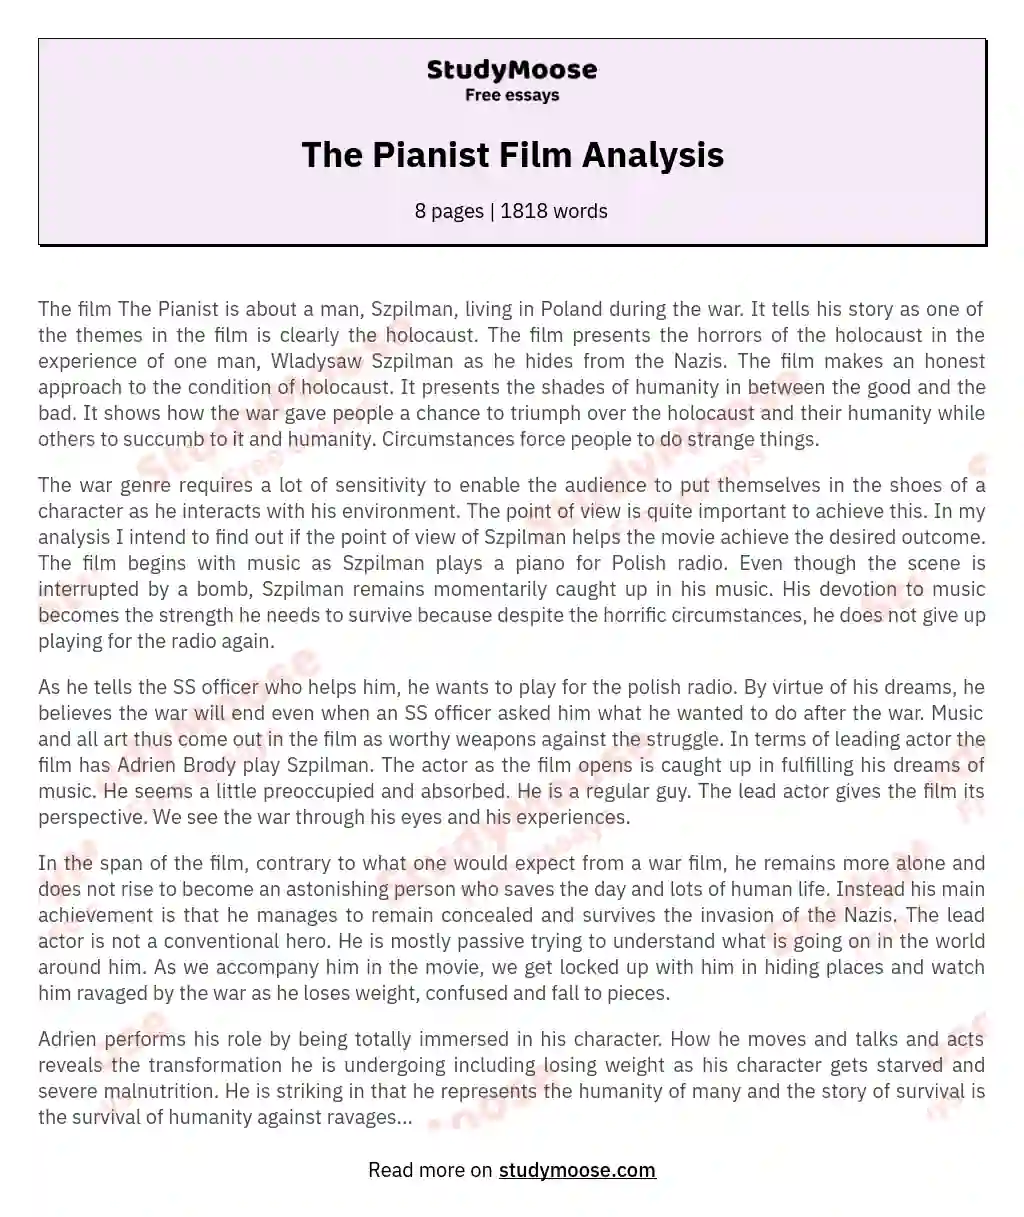 The Pianist Film Analysis essay